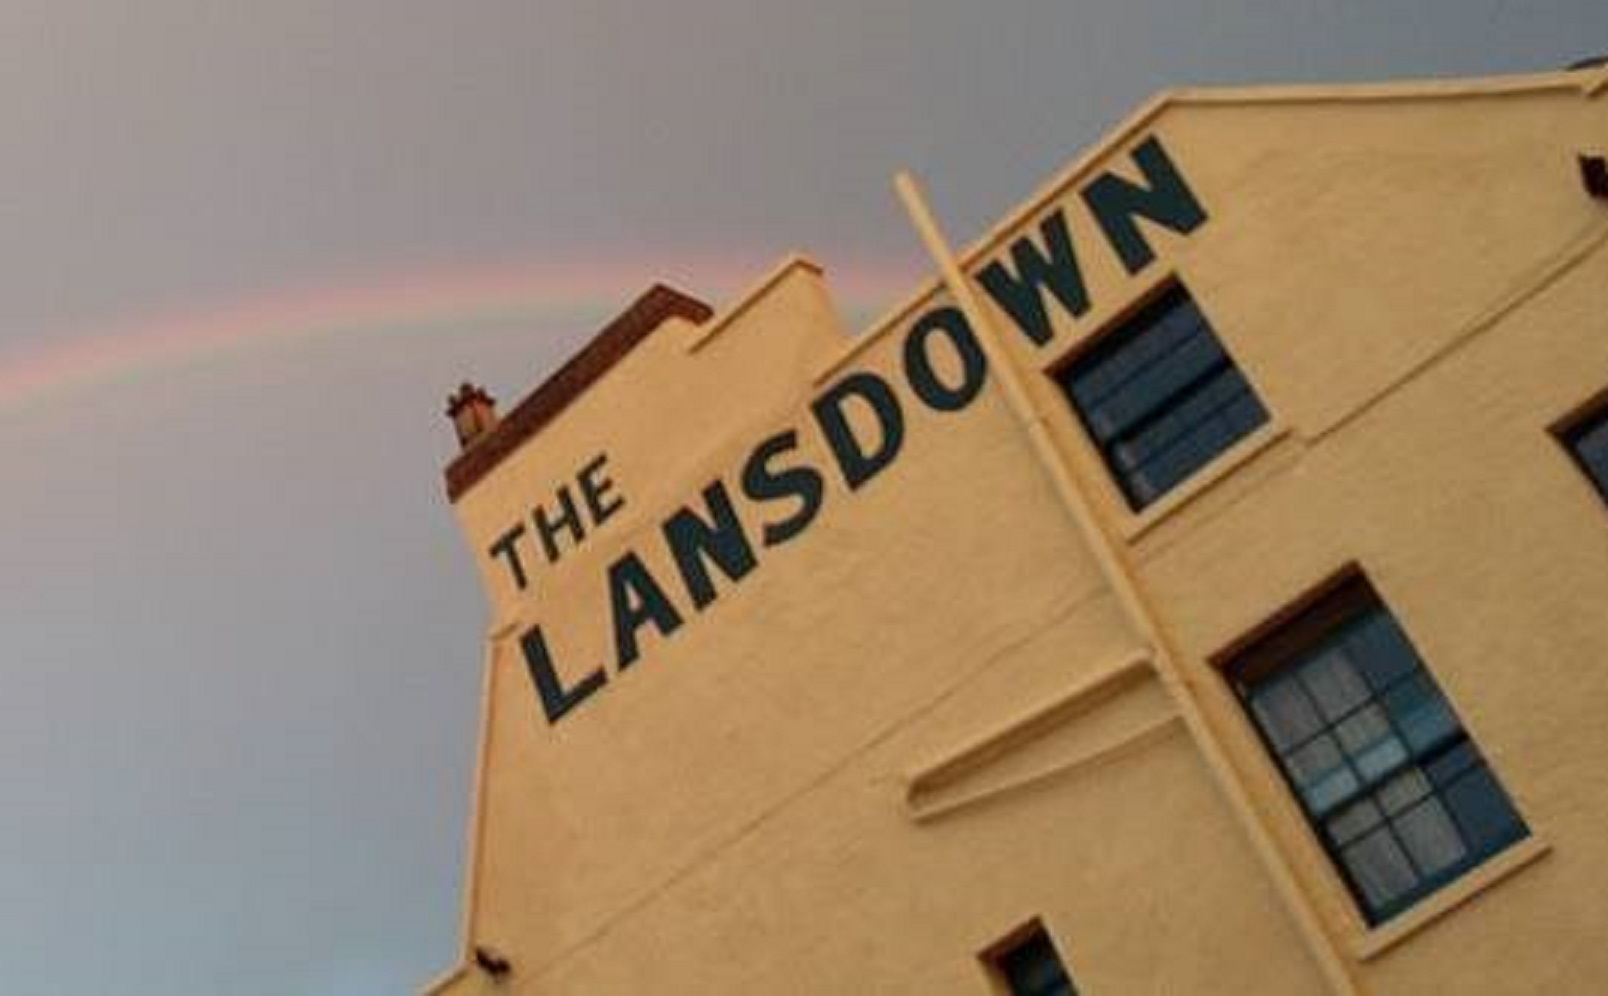 The Lansdown